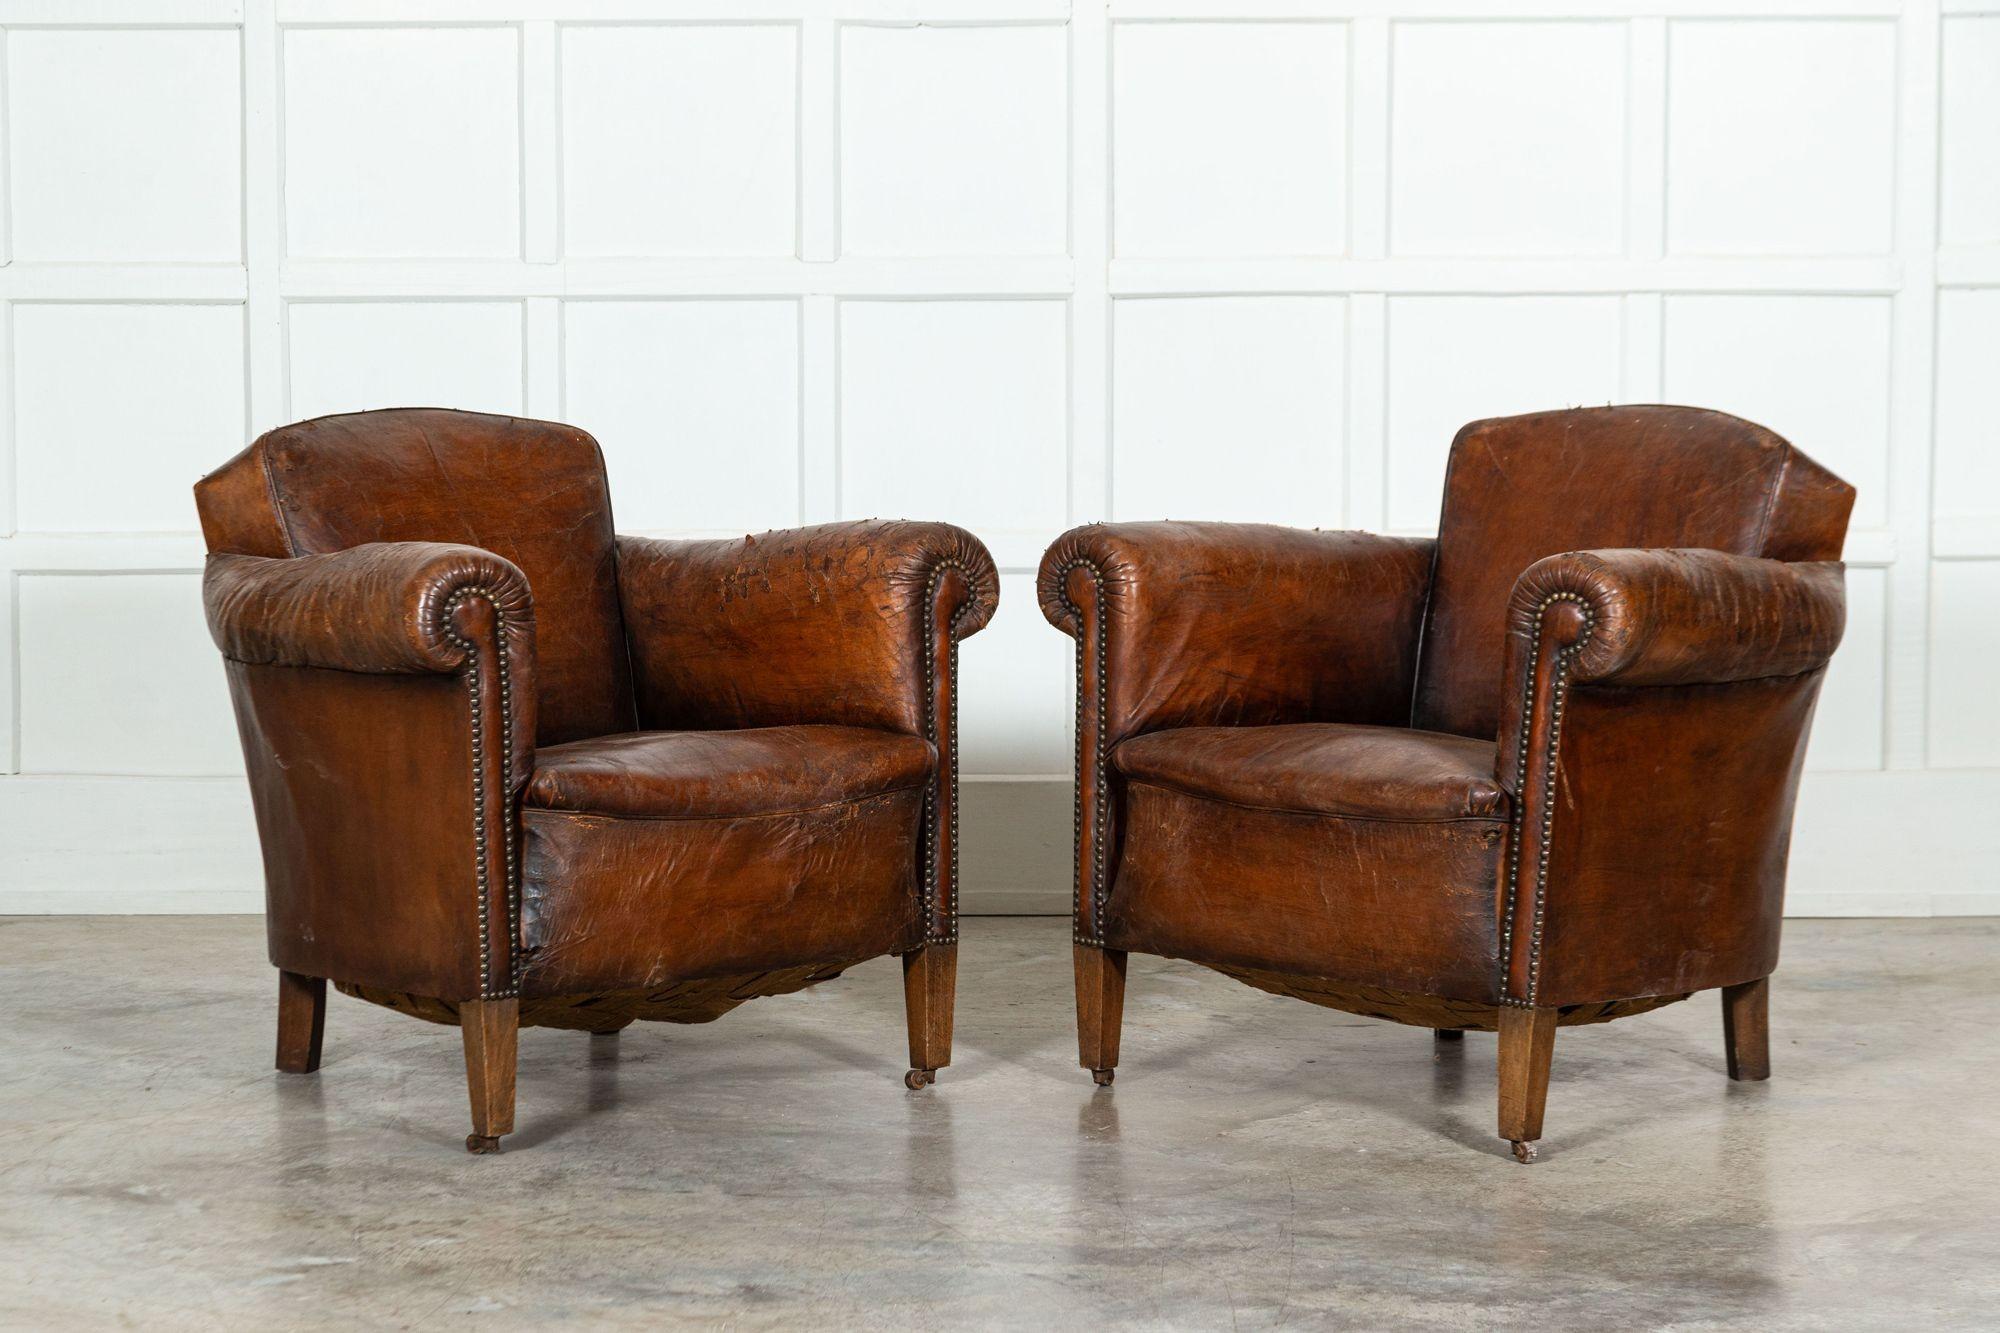 circa 1900
Pair French Sprung Leather Club Armchairs
Price is for the pair
sku 1515
W83 x D88 x H75cm
Seat height 43cm